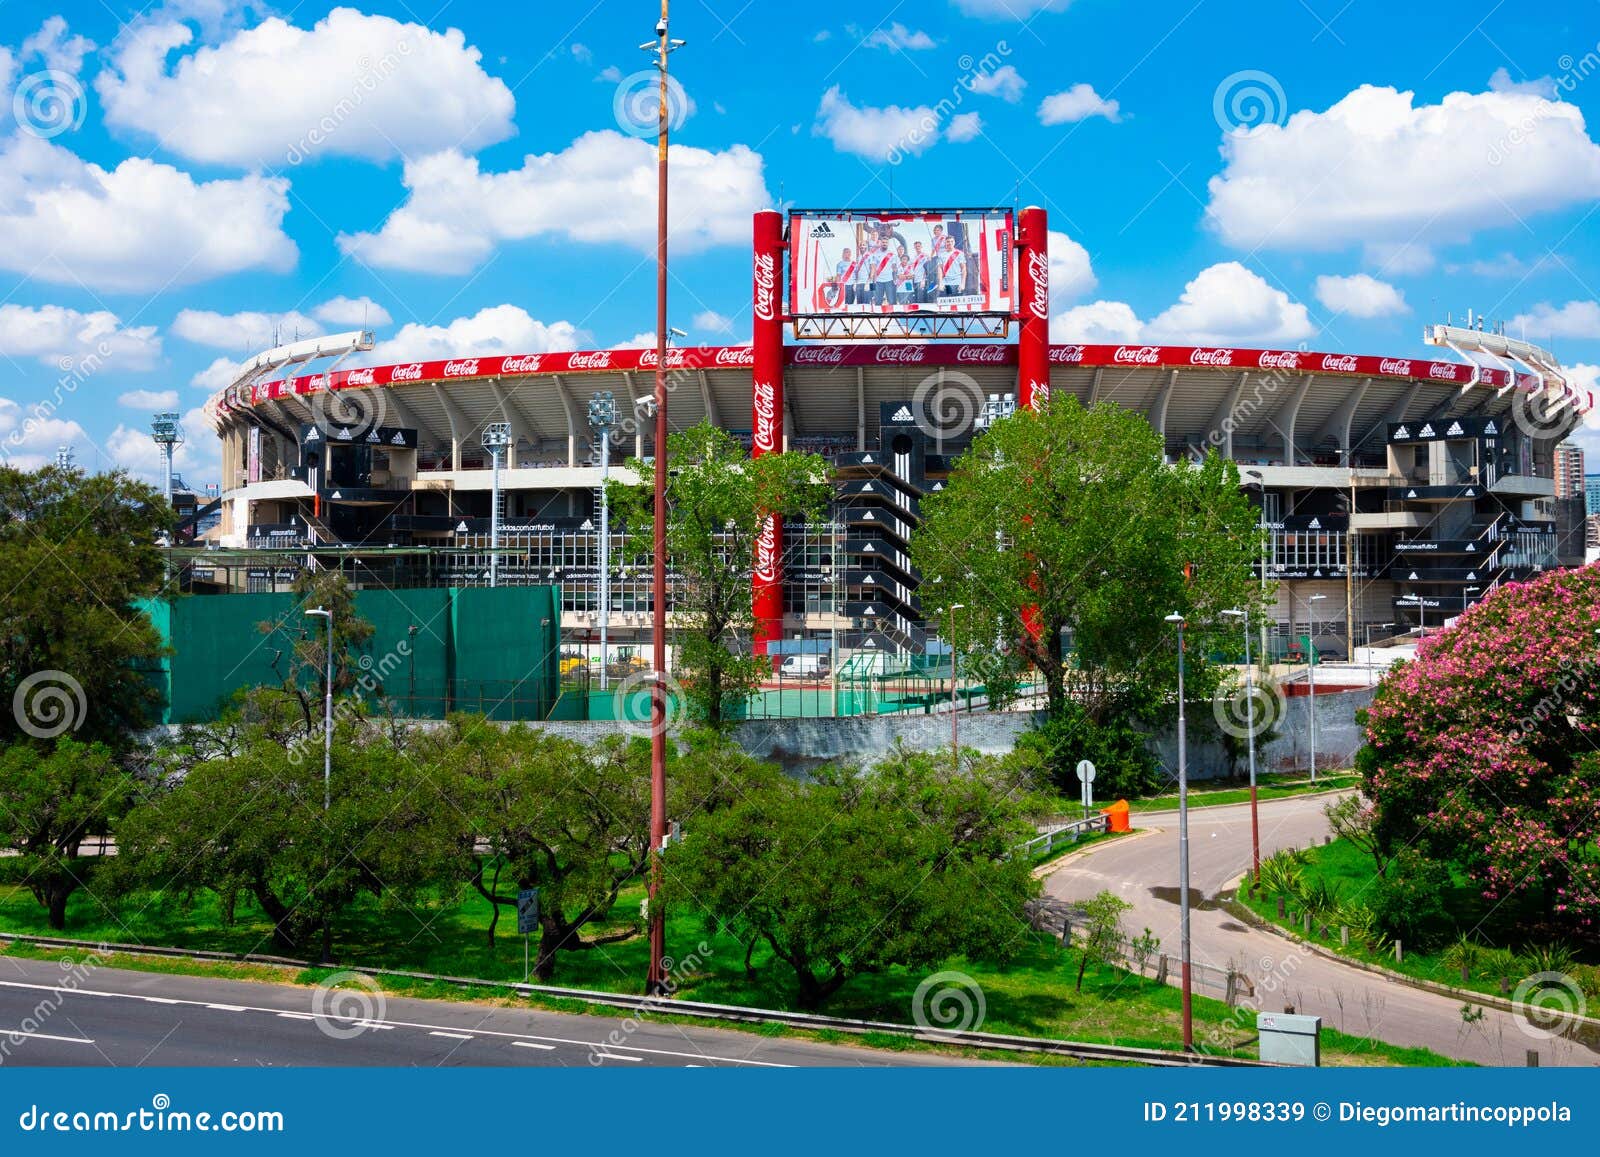 Club Atletico River Plate Stadium Editorial Stock Image - Image of soccer,  stadium: 211998339